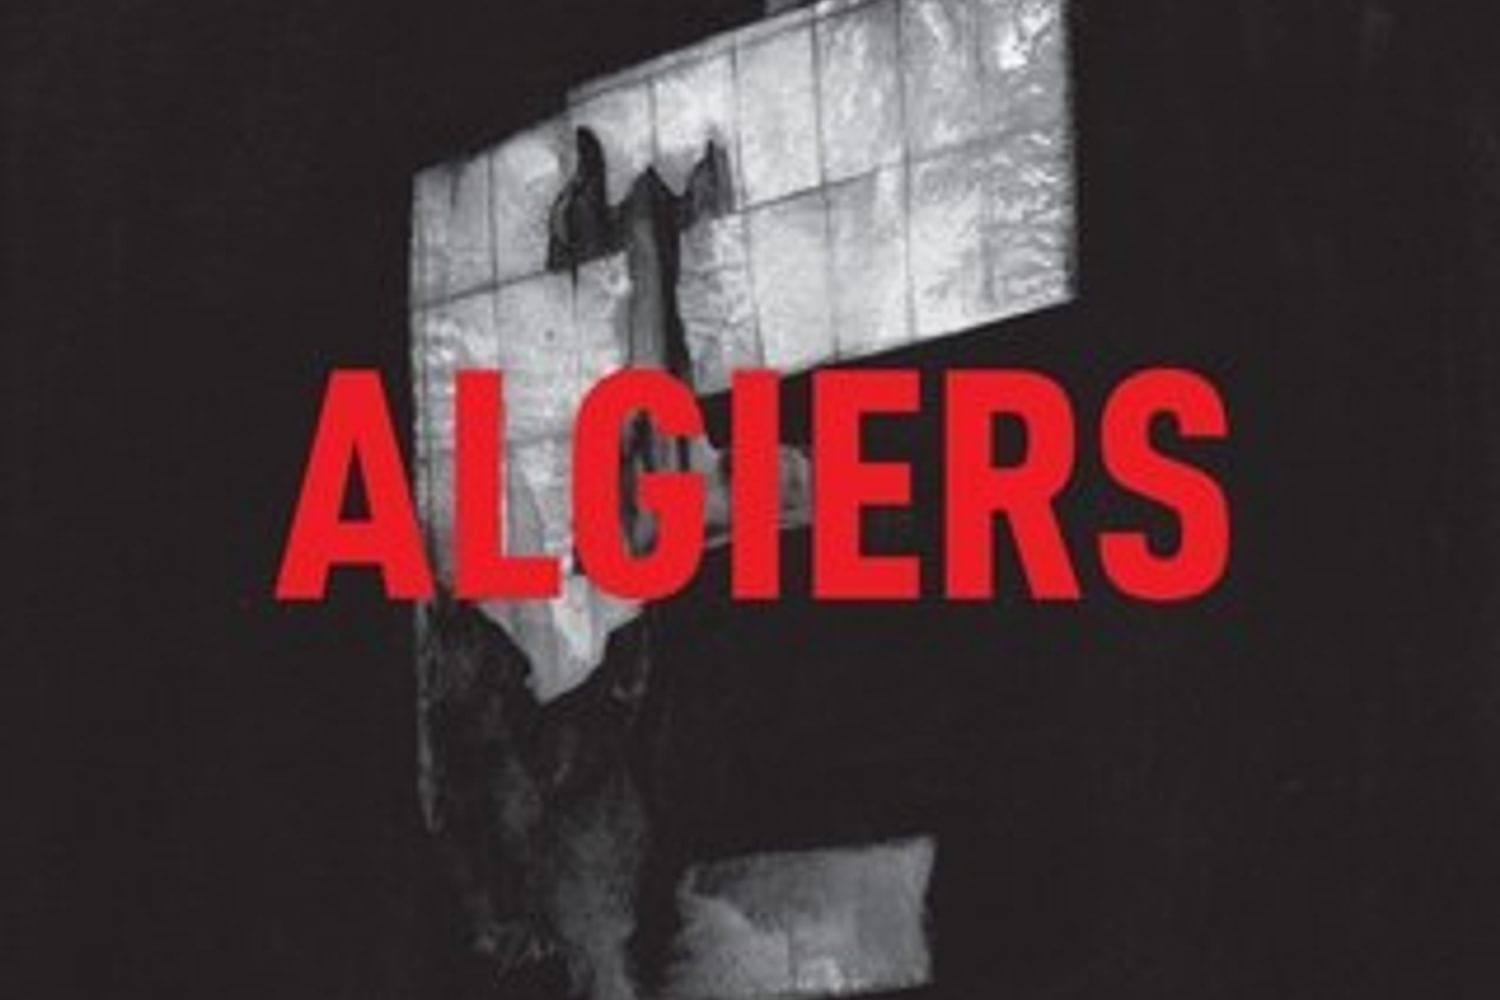 Algiers - Algiers